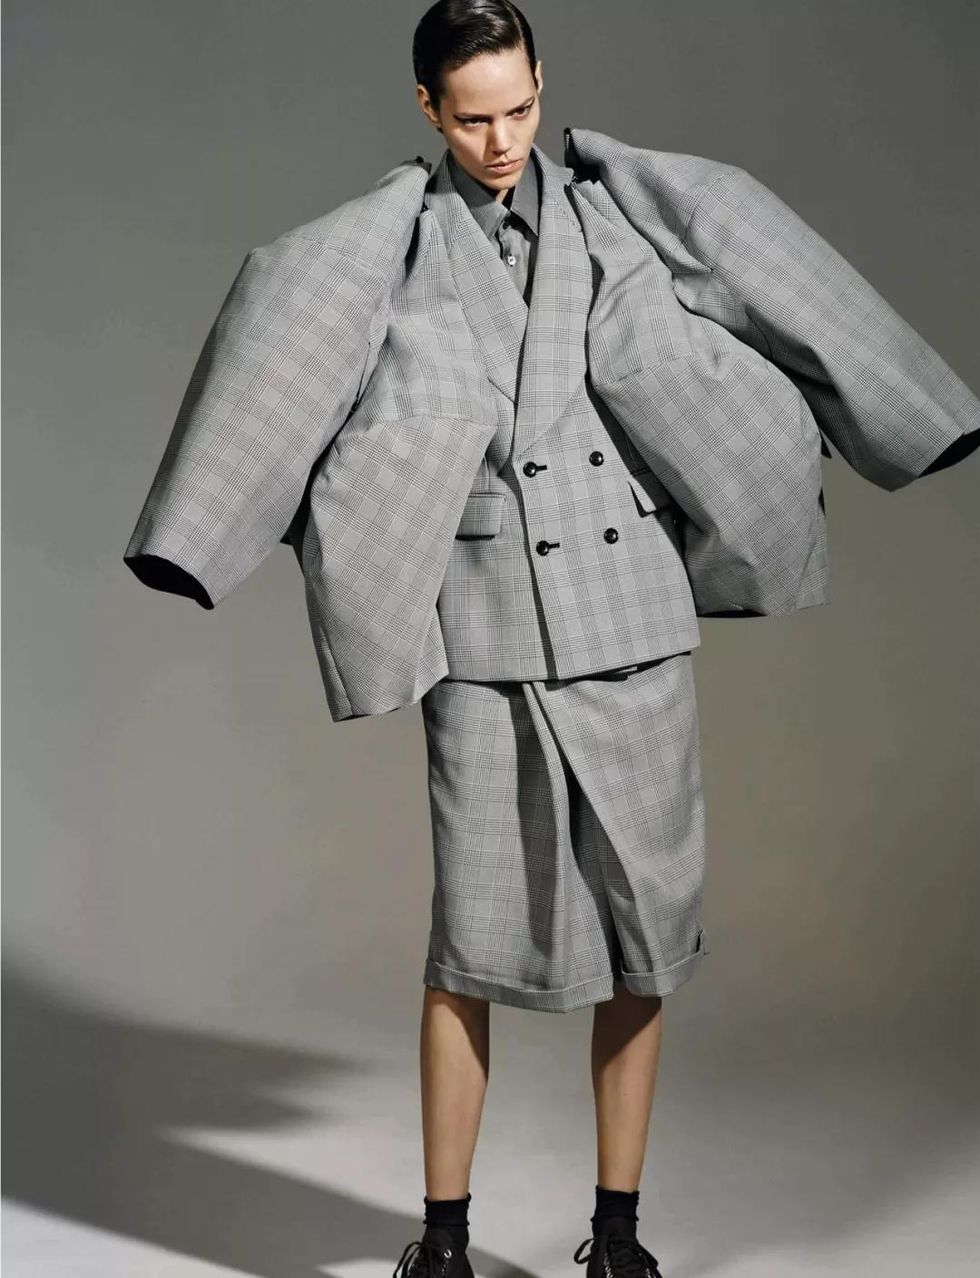 Clothing, Fashion, Fashion model, Outerwear, Overcoat, Coat, Suit, Human, Fashion design, Model, 